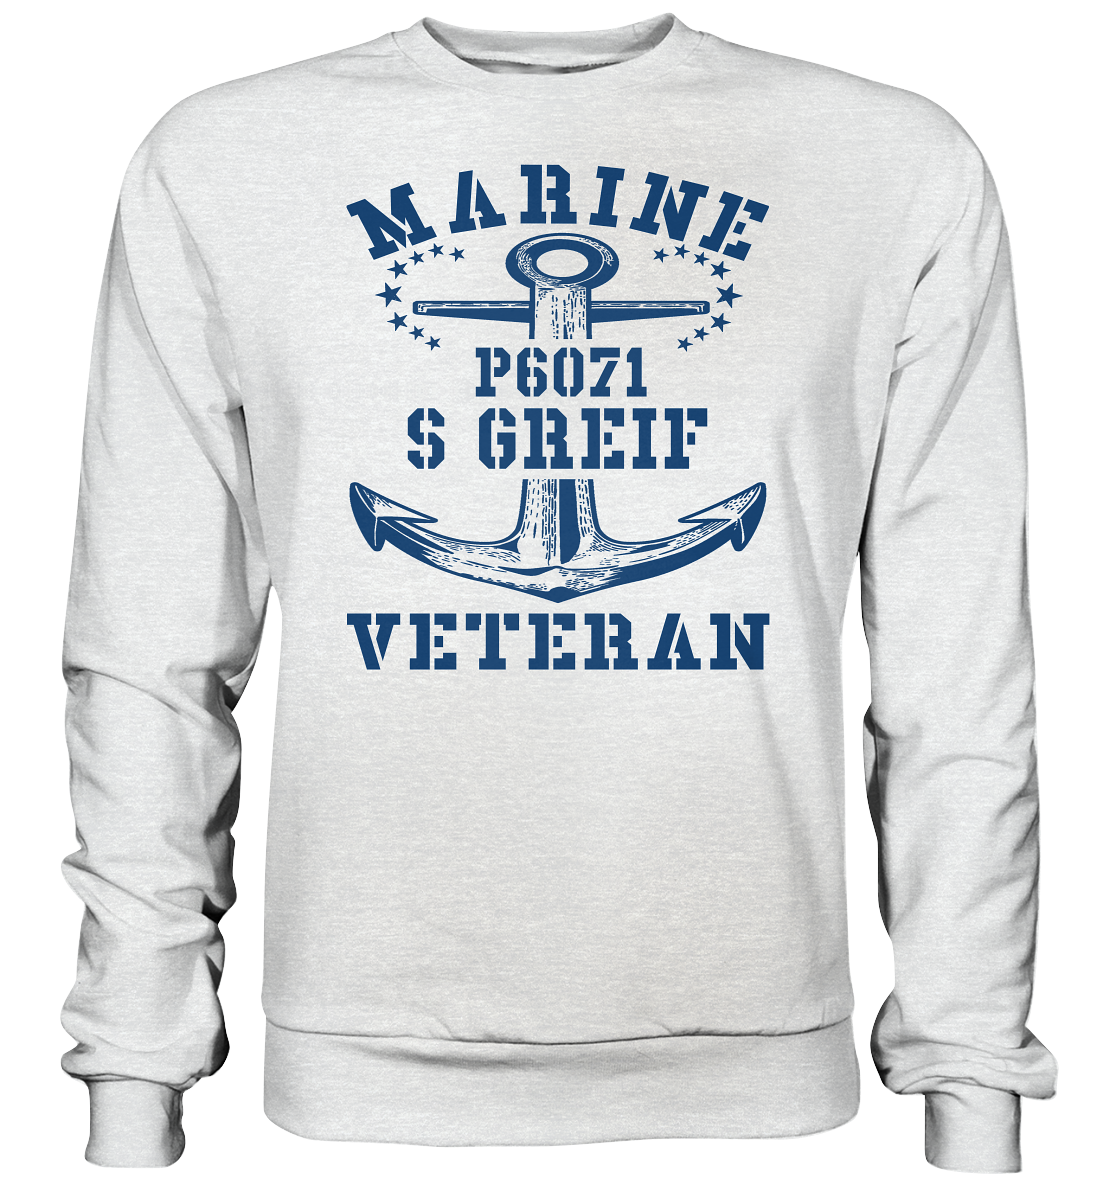 P6071 S GREIF Marine Veteran - Premium Sweatshirt